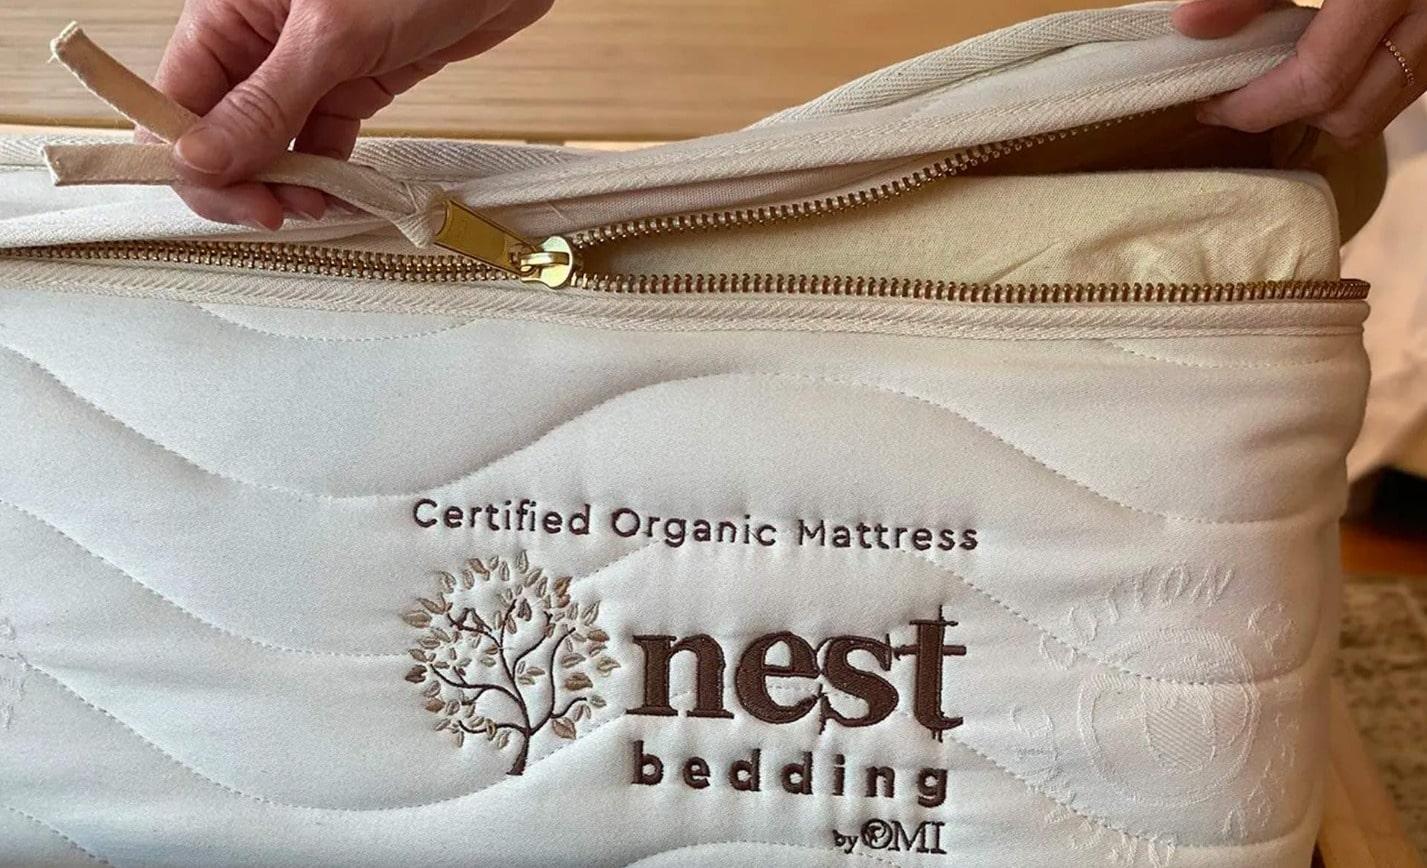 does nest bedding pickup old mattress